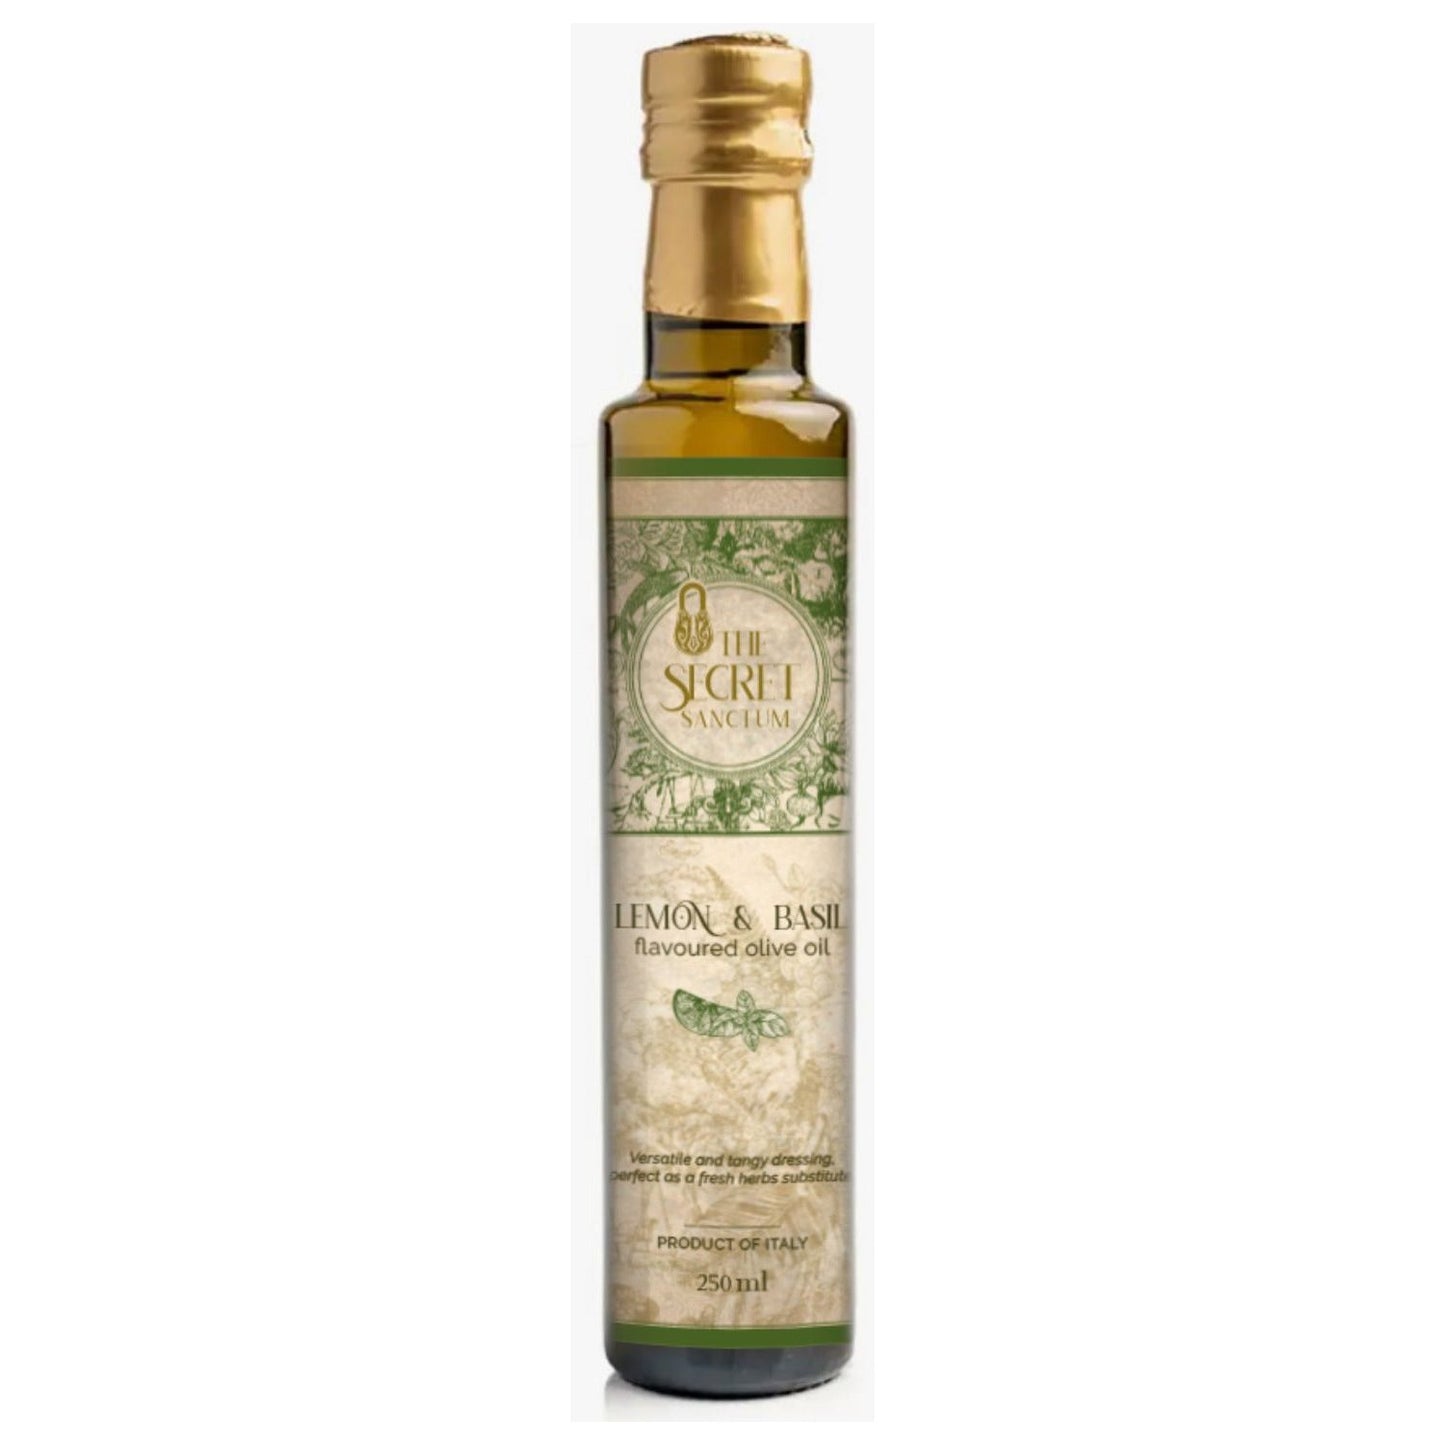 LEMON AND BASIL flavoured olive oil  250 ml